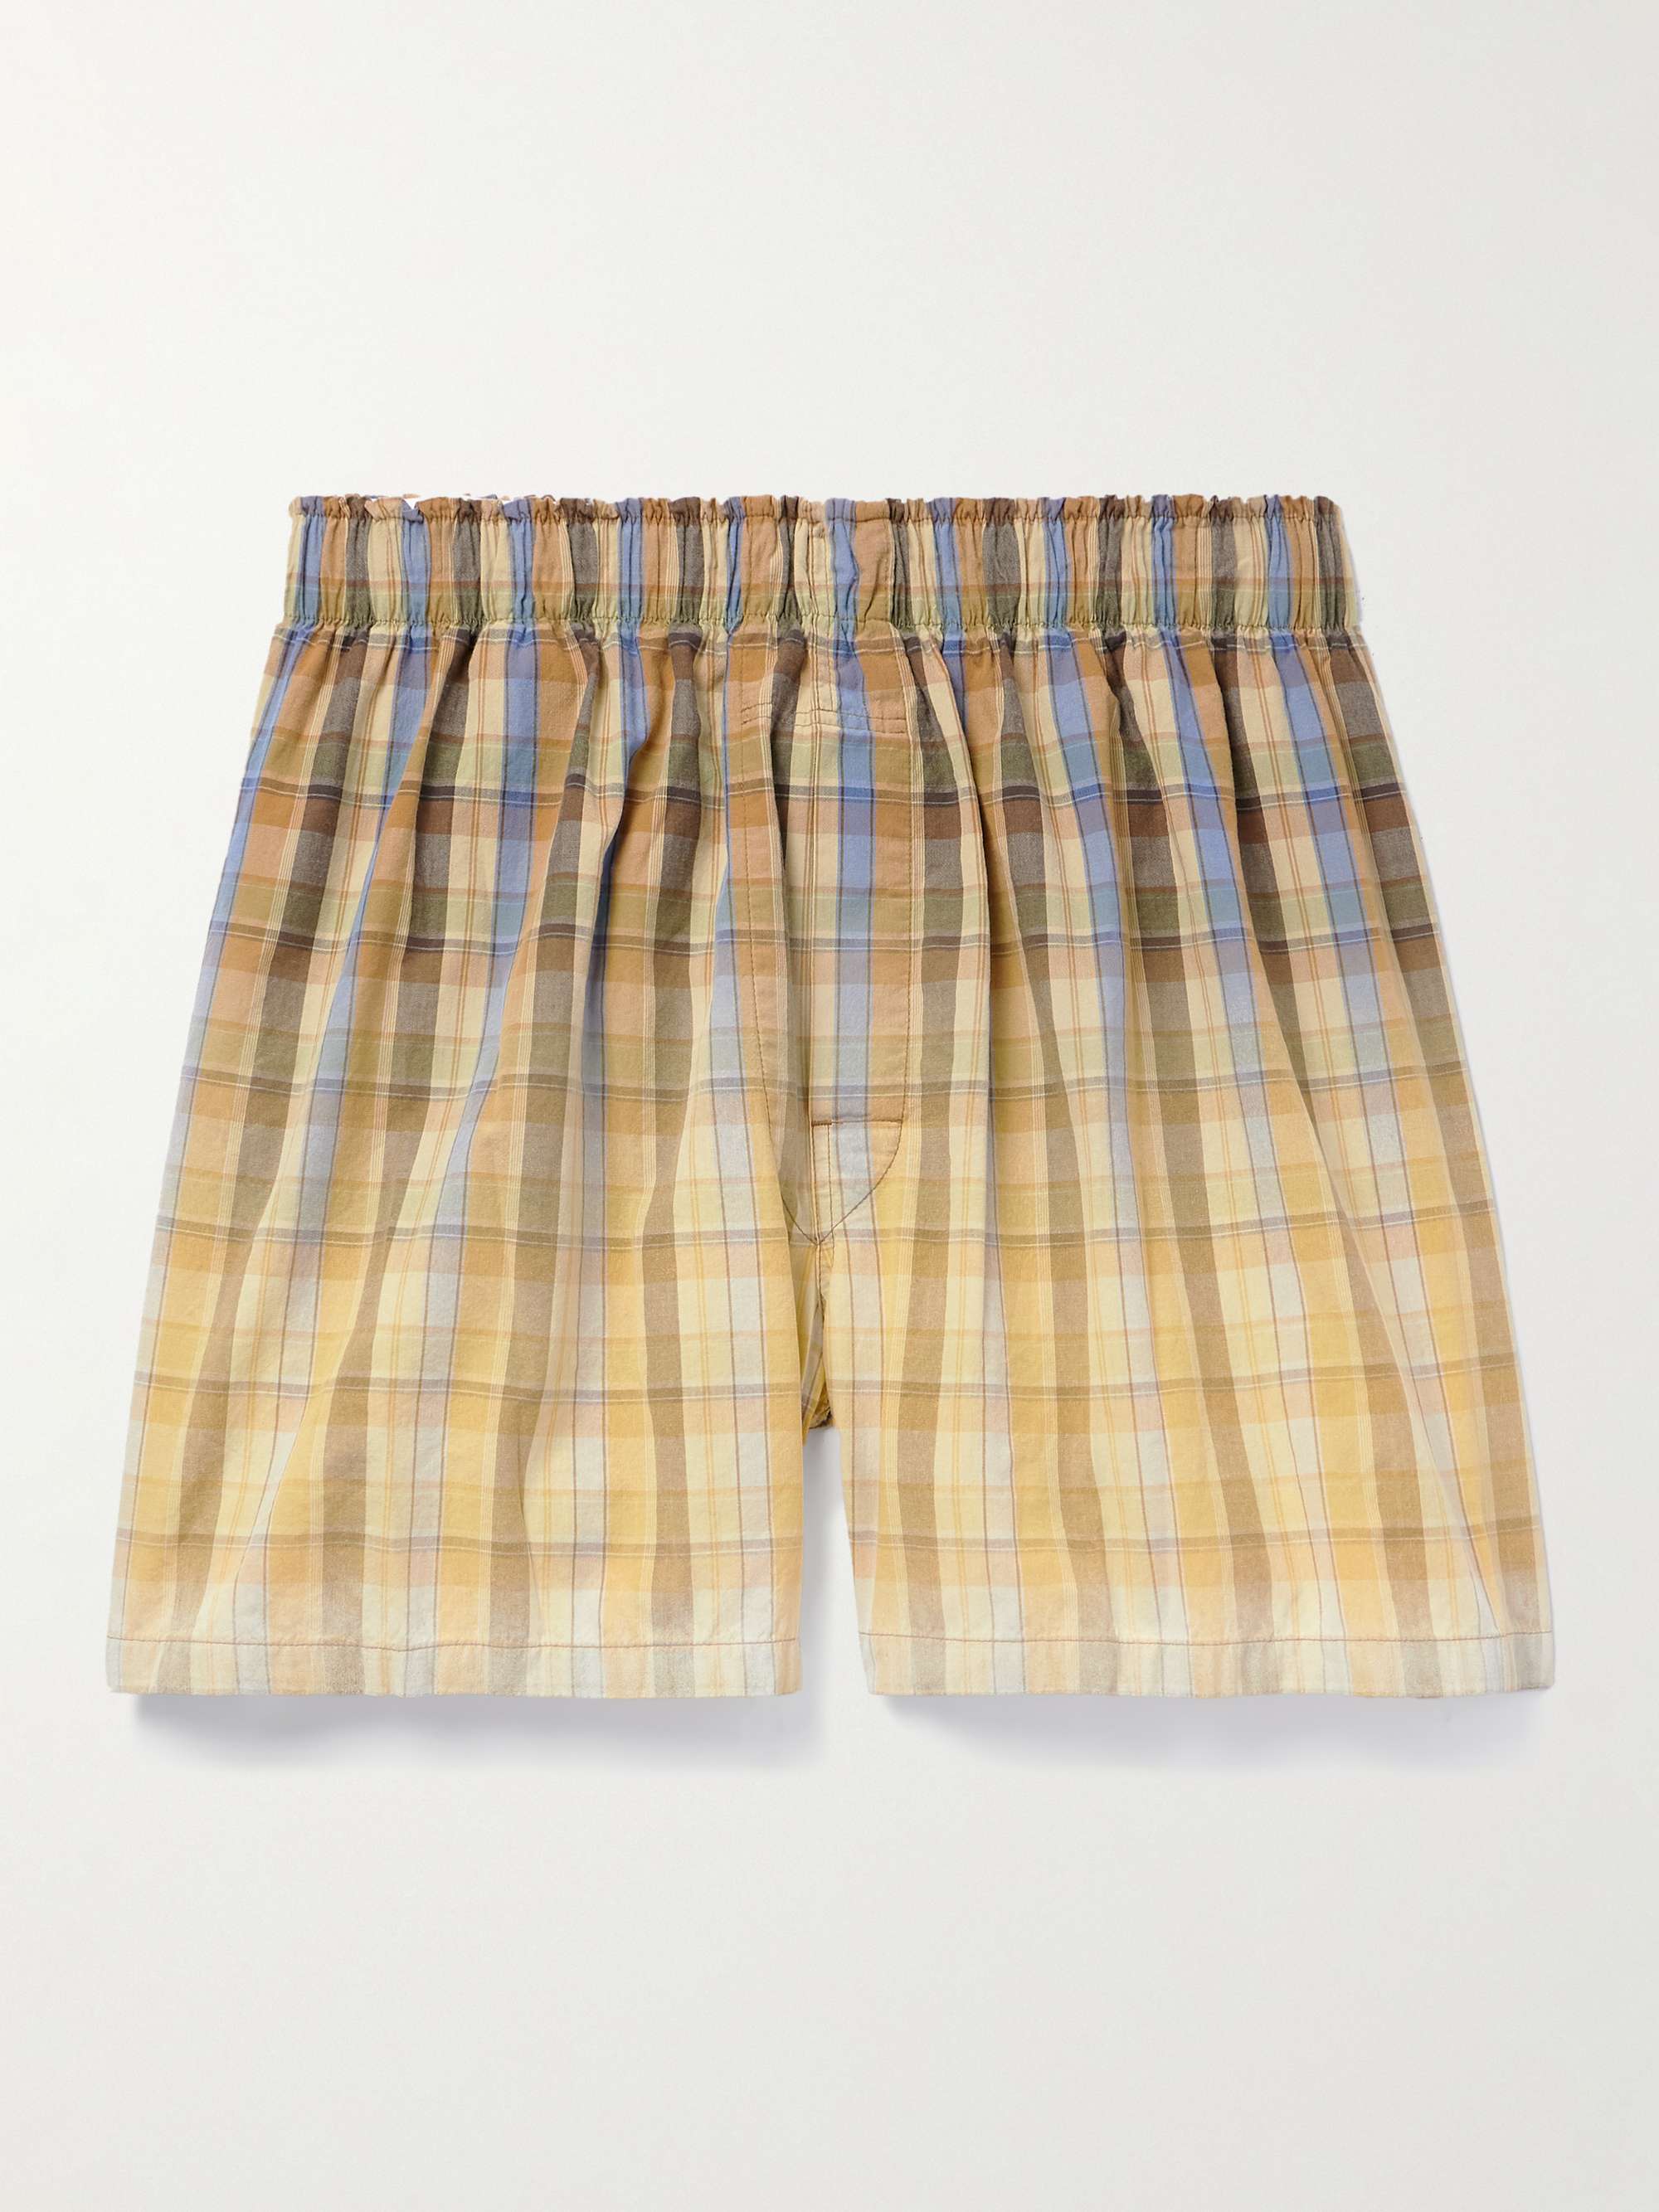 MAISON MARGIELA Checked Cotton-Poplin Boxer Shorts for Men | MR PORTER